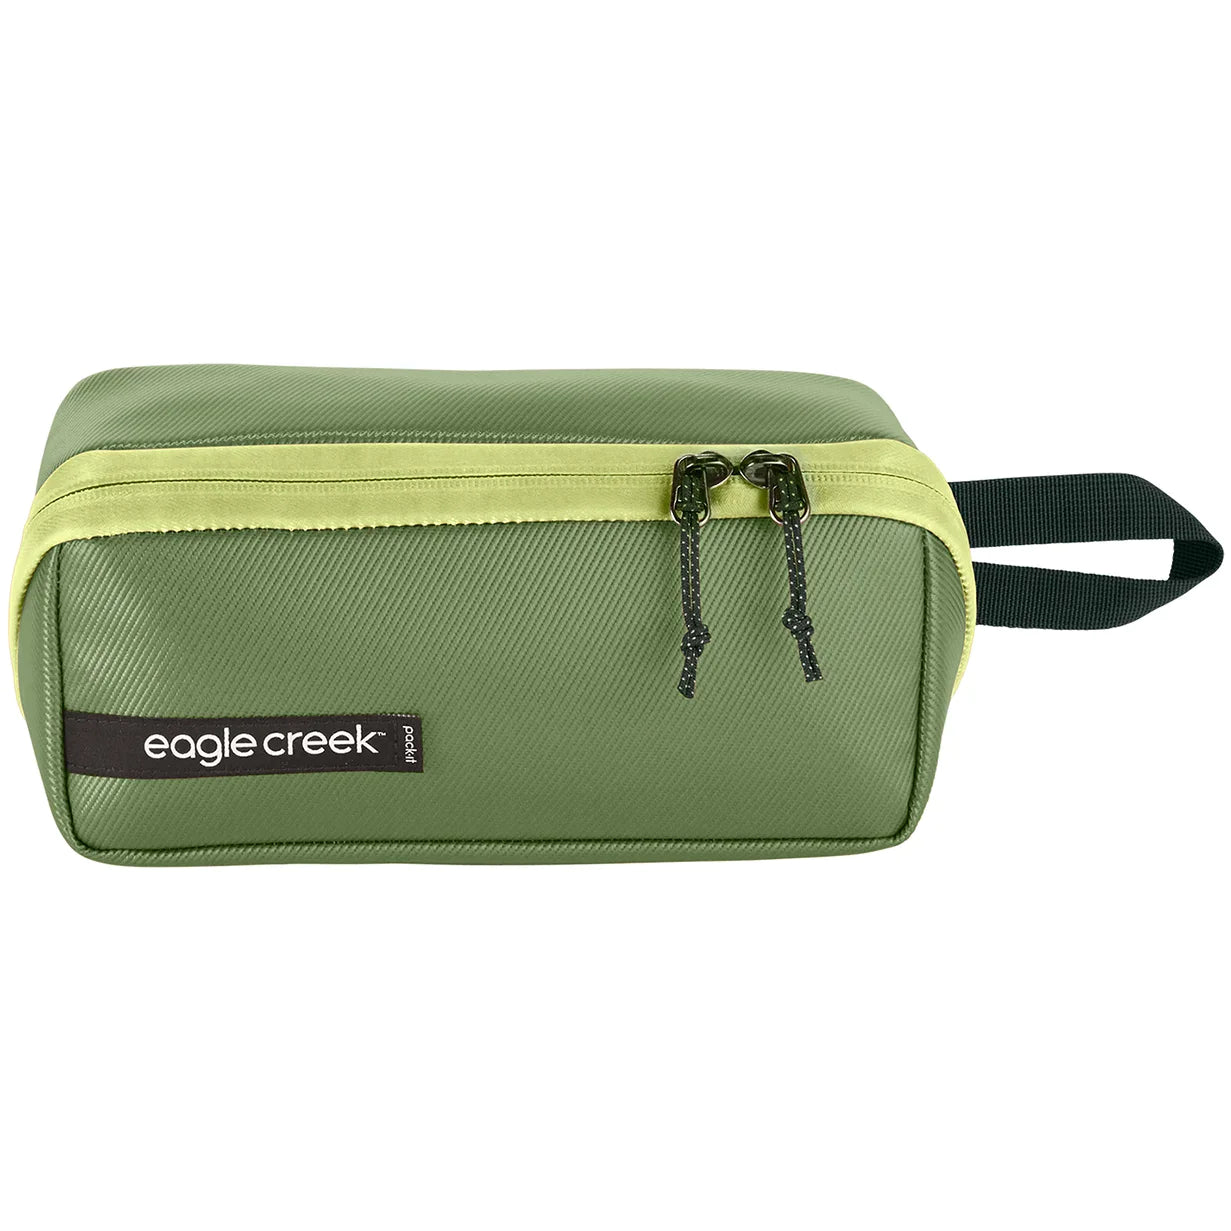 Eagle Creek Pack-It Gear Quick Trip Toiletry Bag 25 cm - black